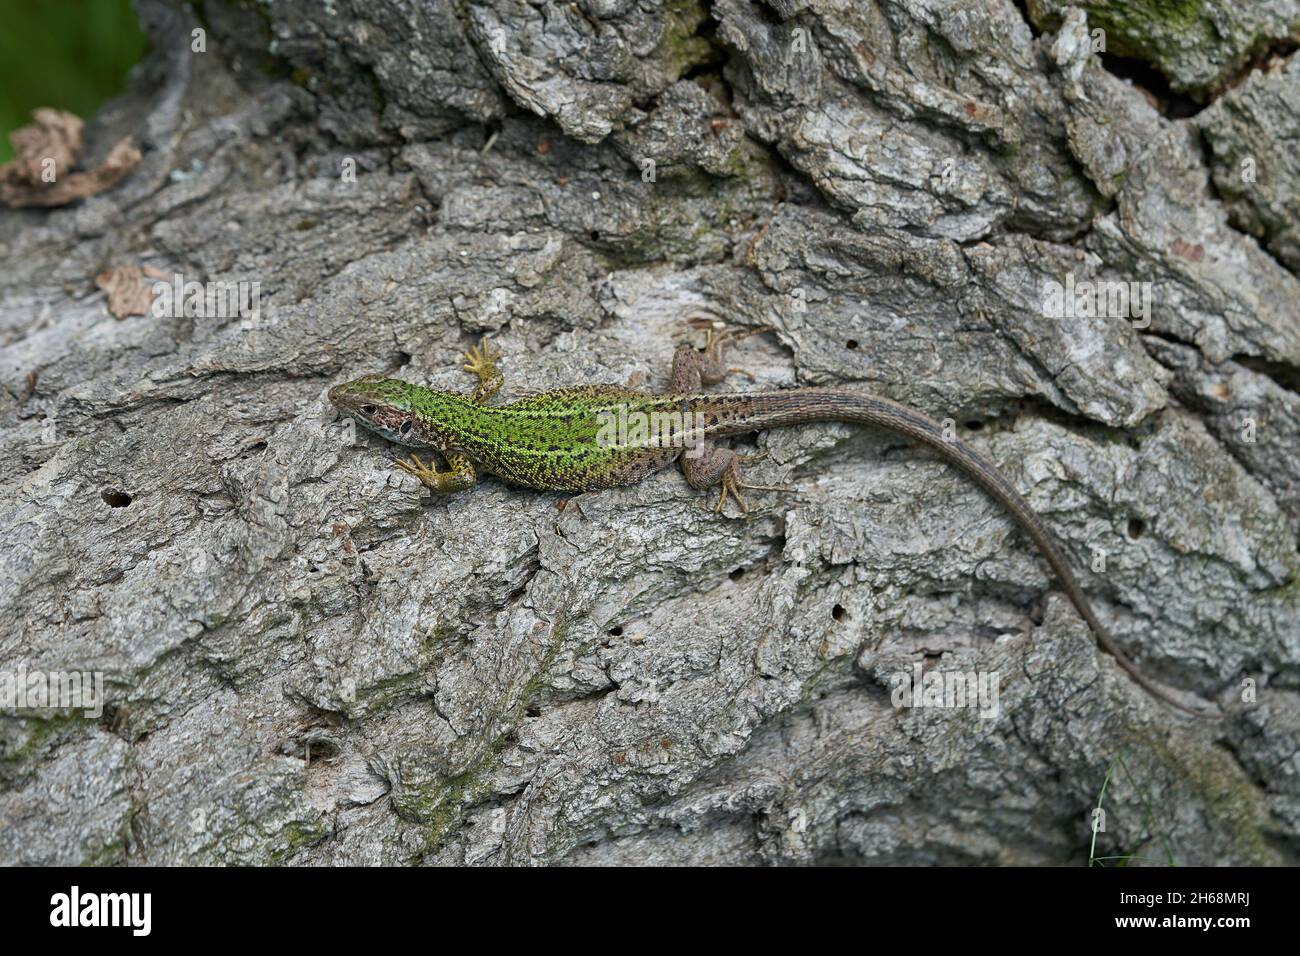 Tierwelt Foto des Europäischen Green Lizard Lacerta viridis Stockfoto